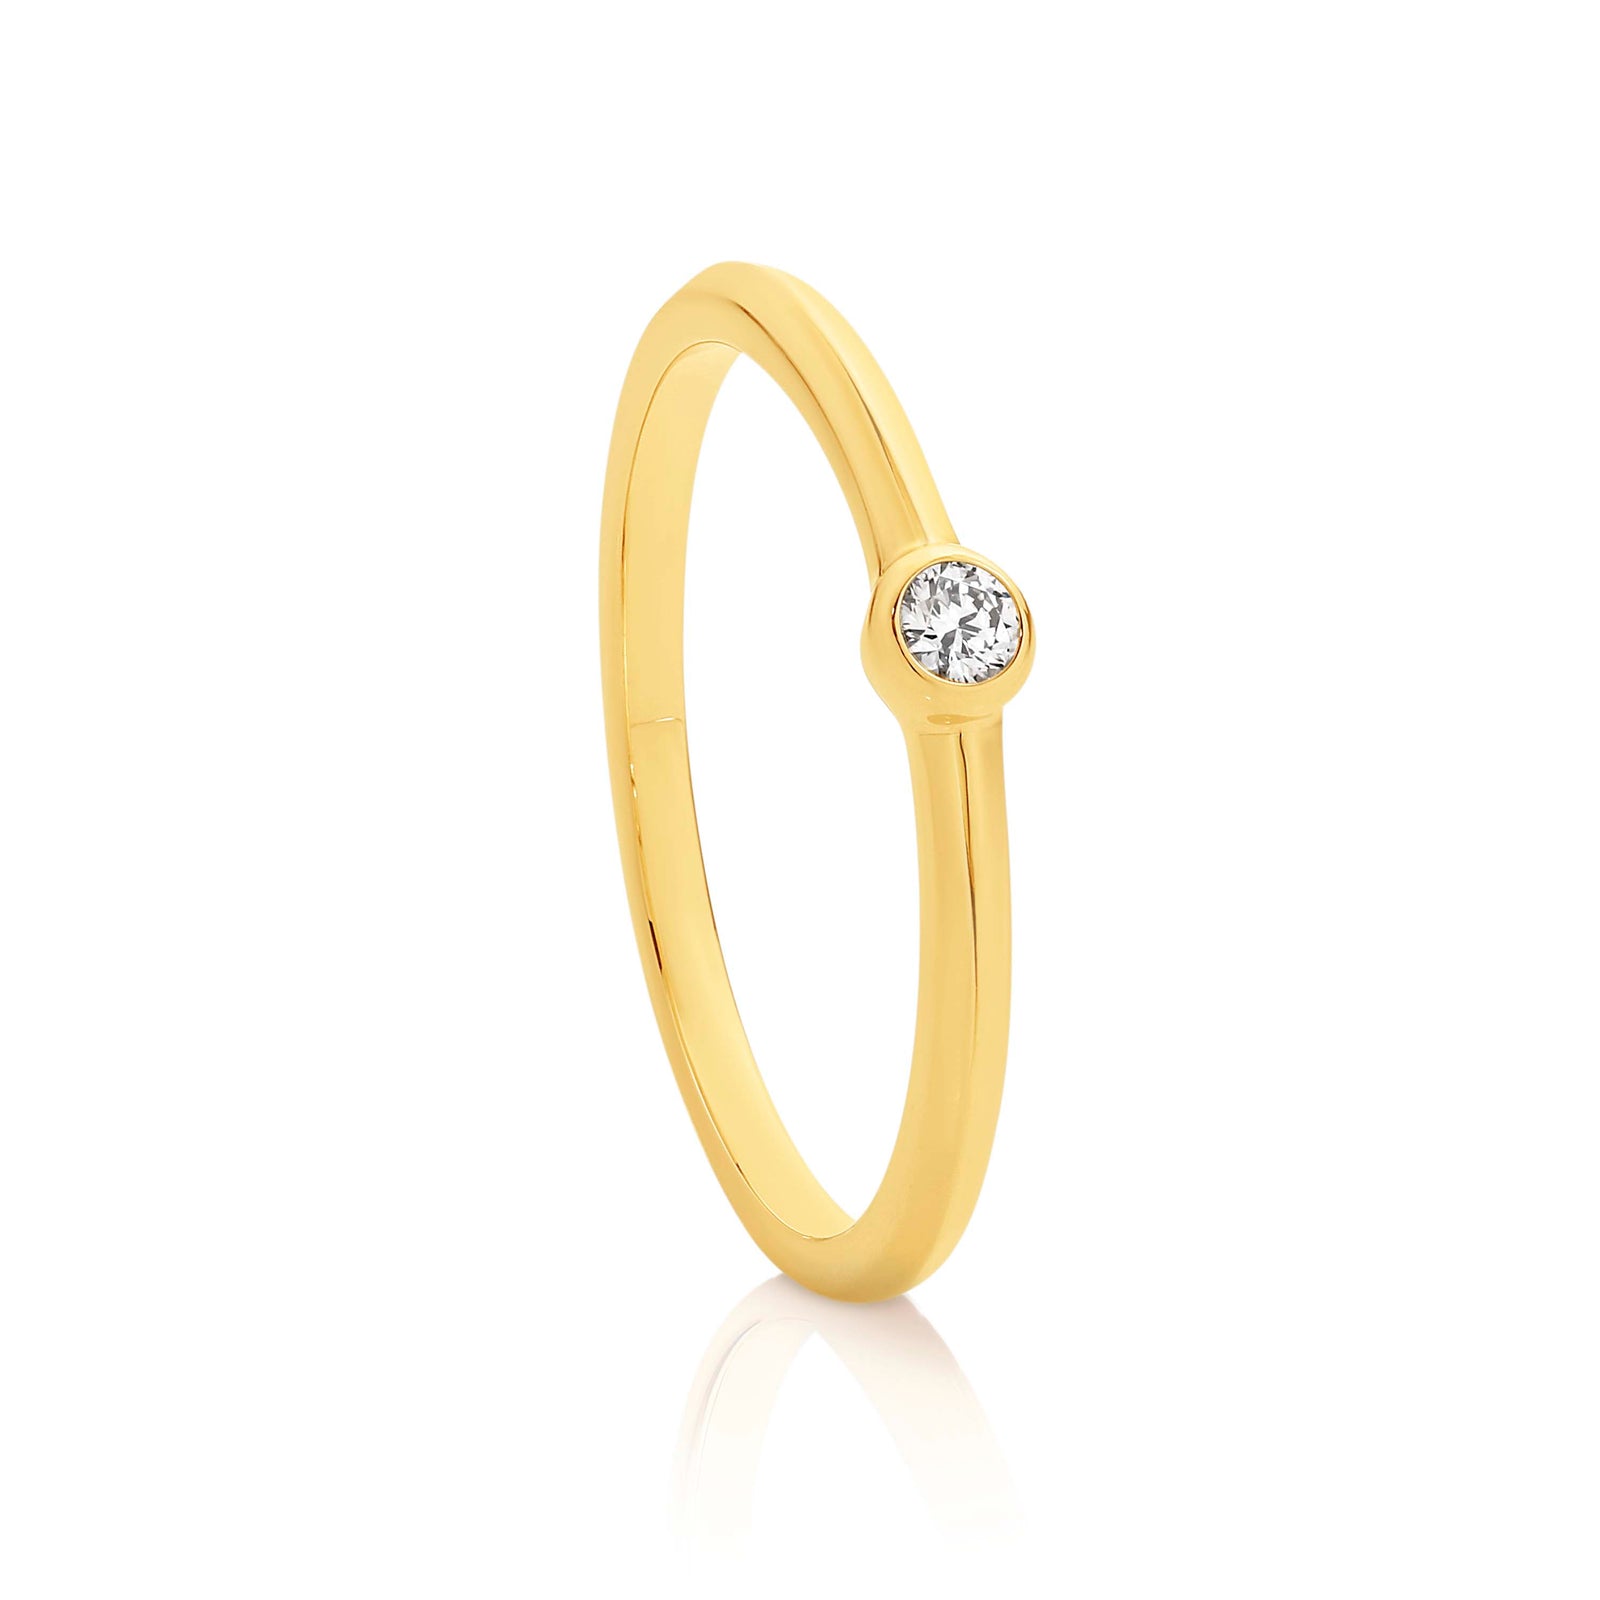 Bezel Set Diamond Dress Ring in 9ct Yellow Gold